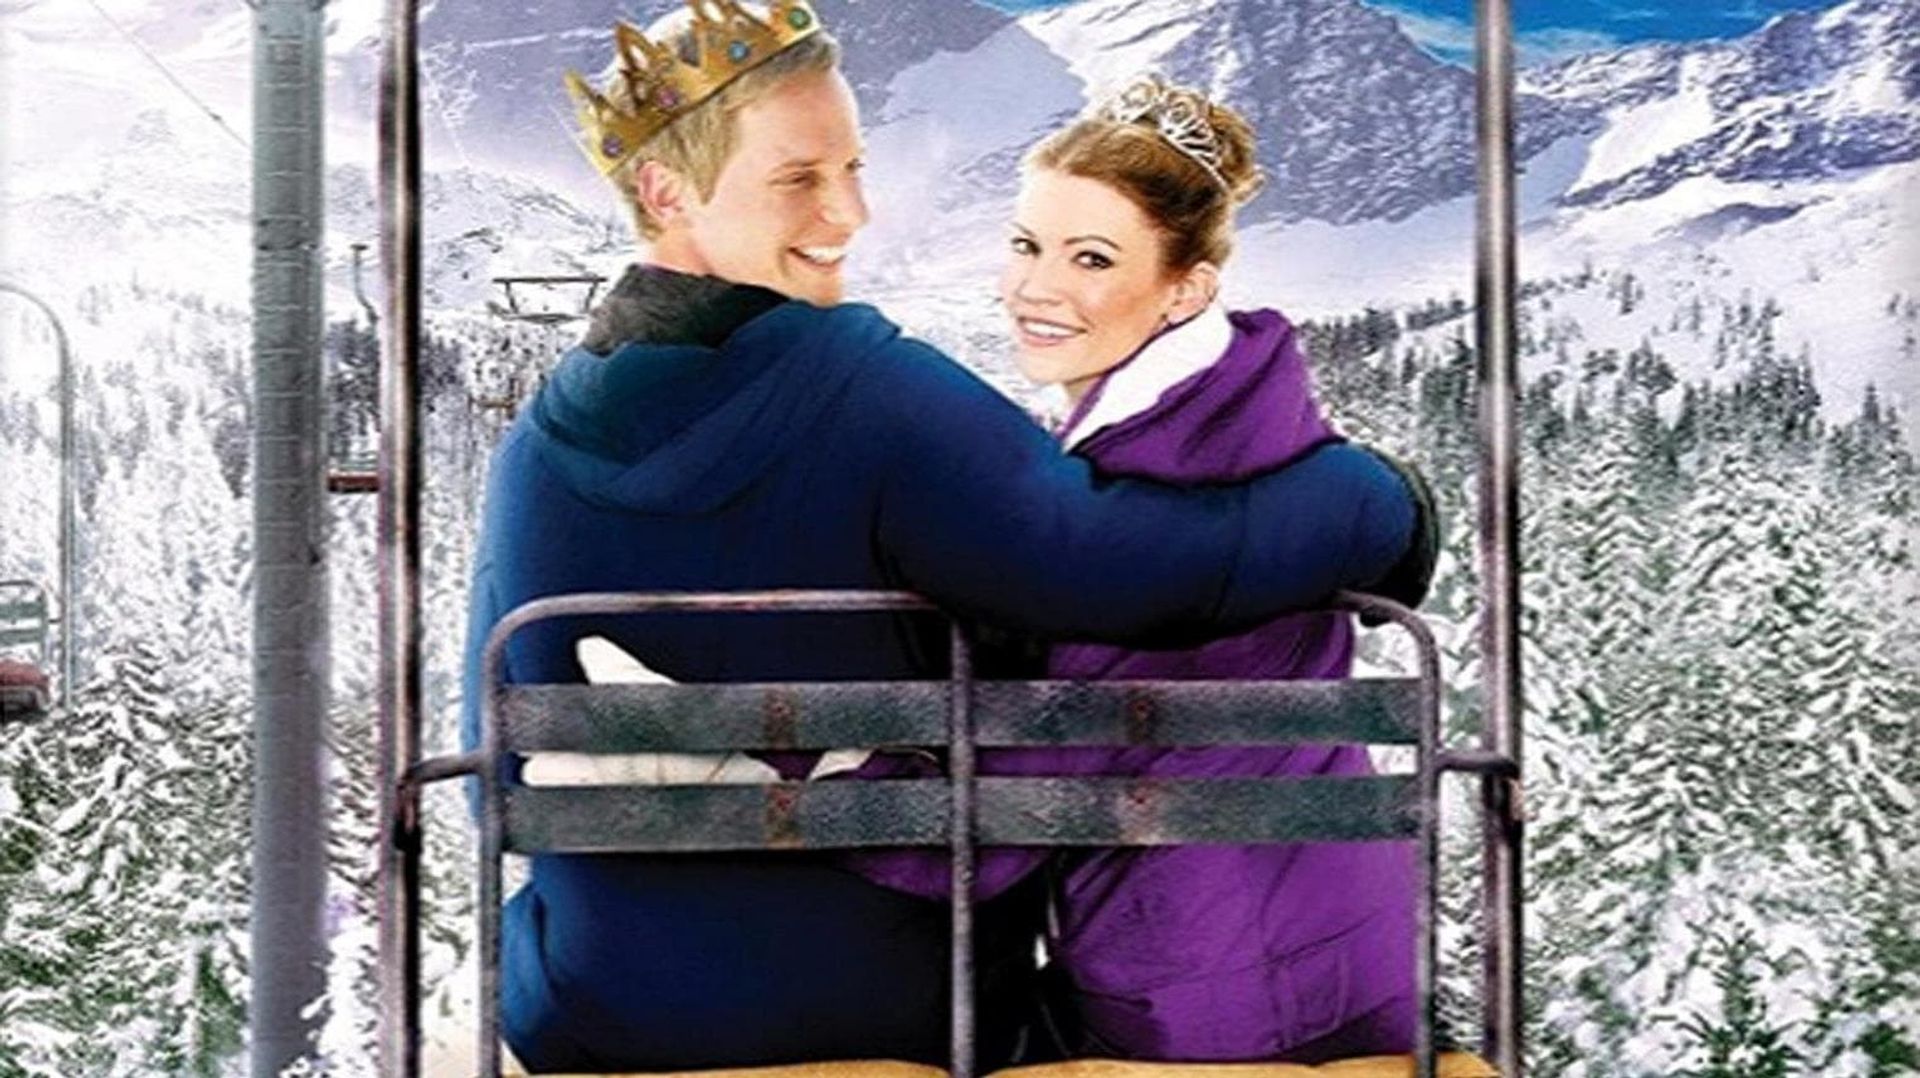 The Prince & Me 3: A Royal Honeymoon Backdrop